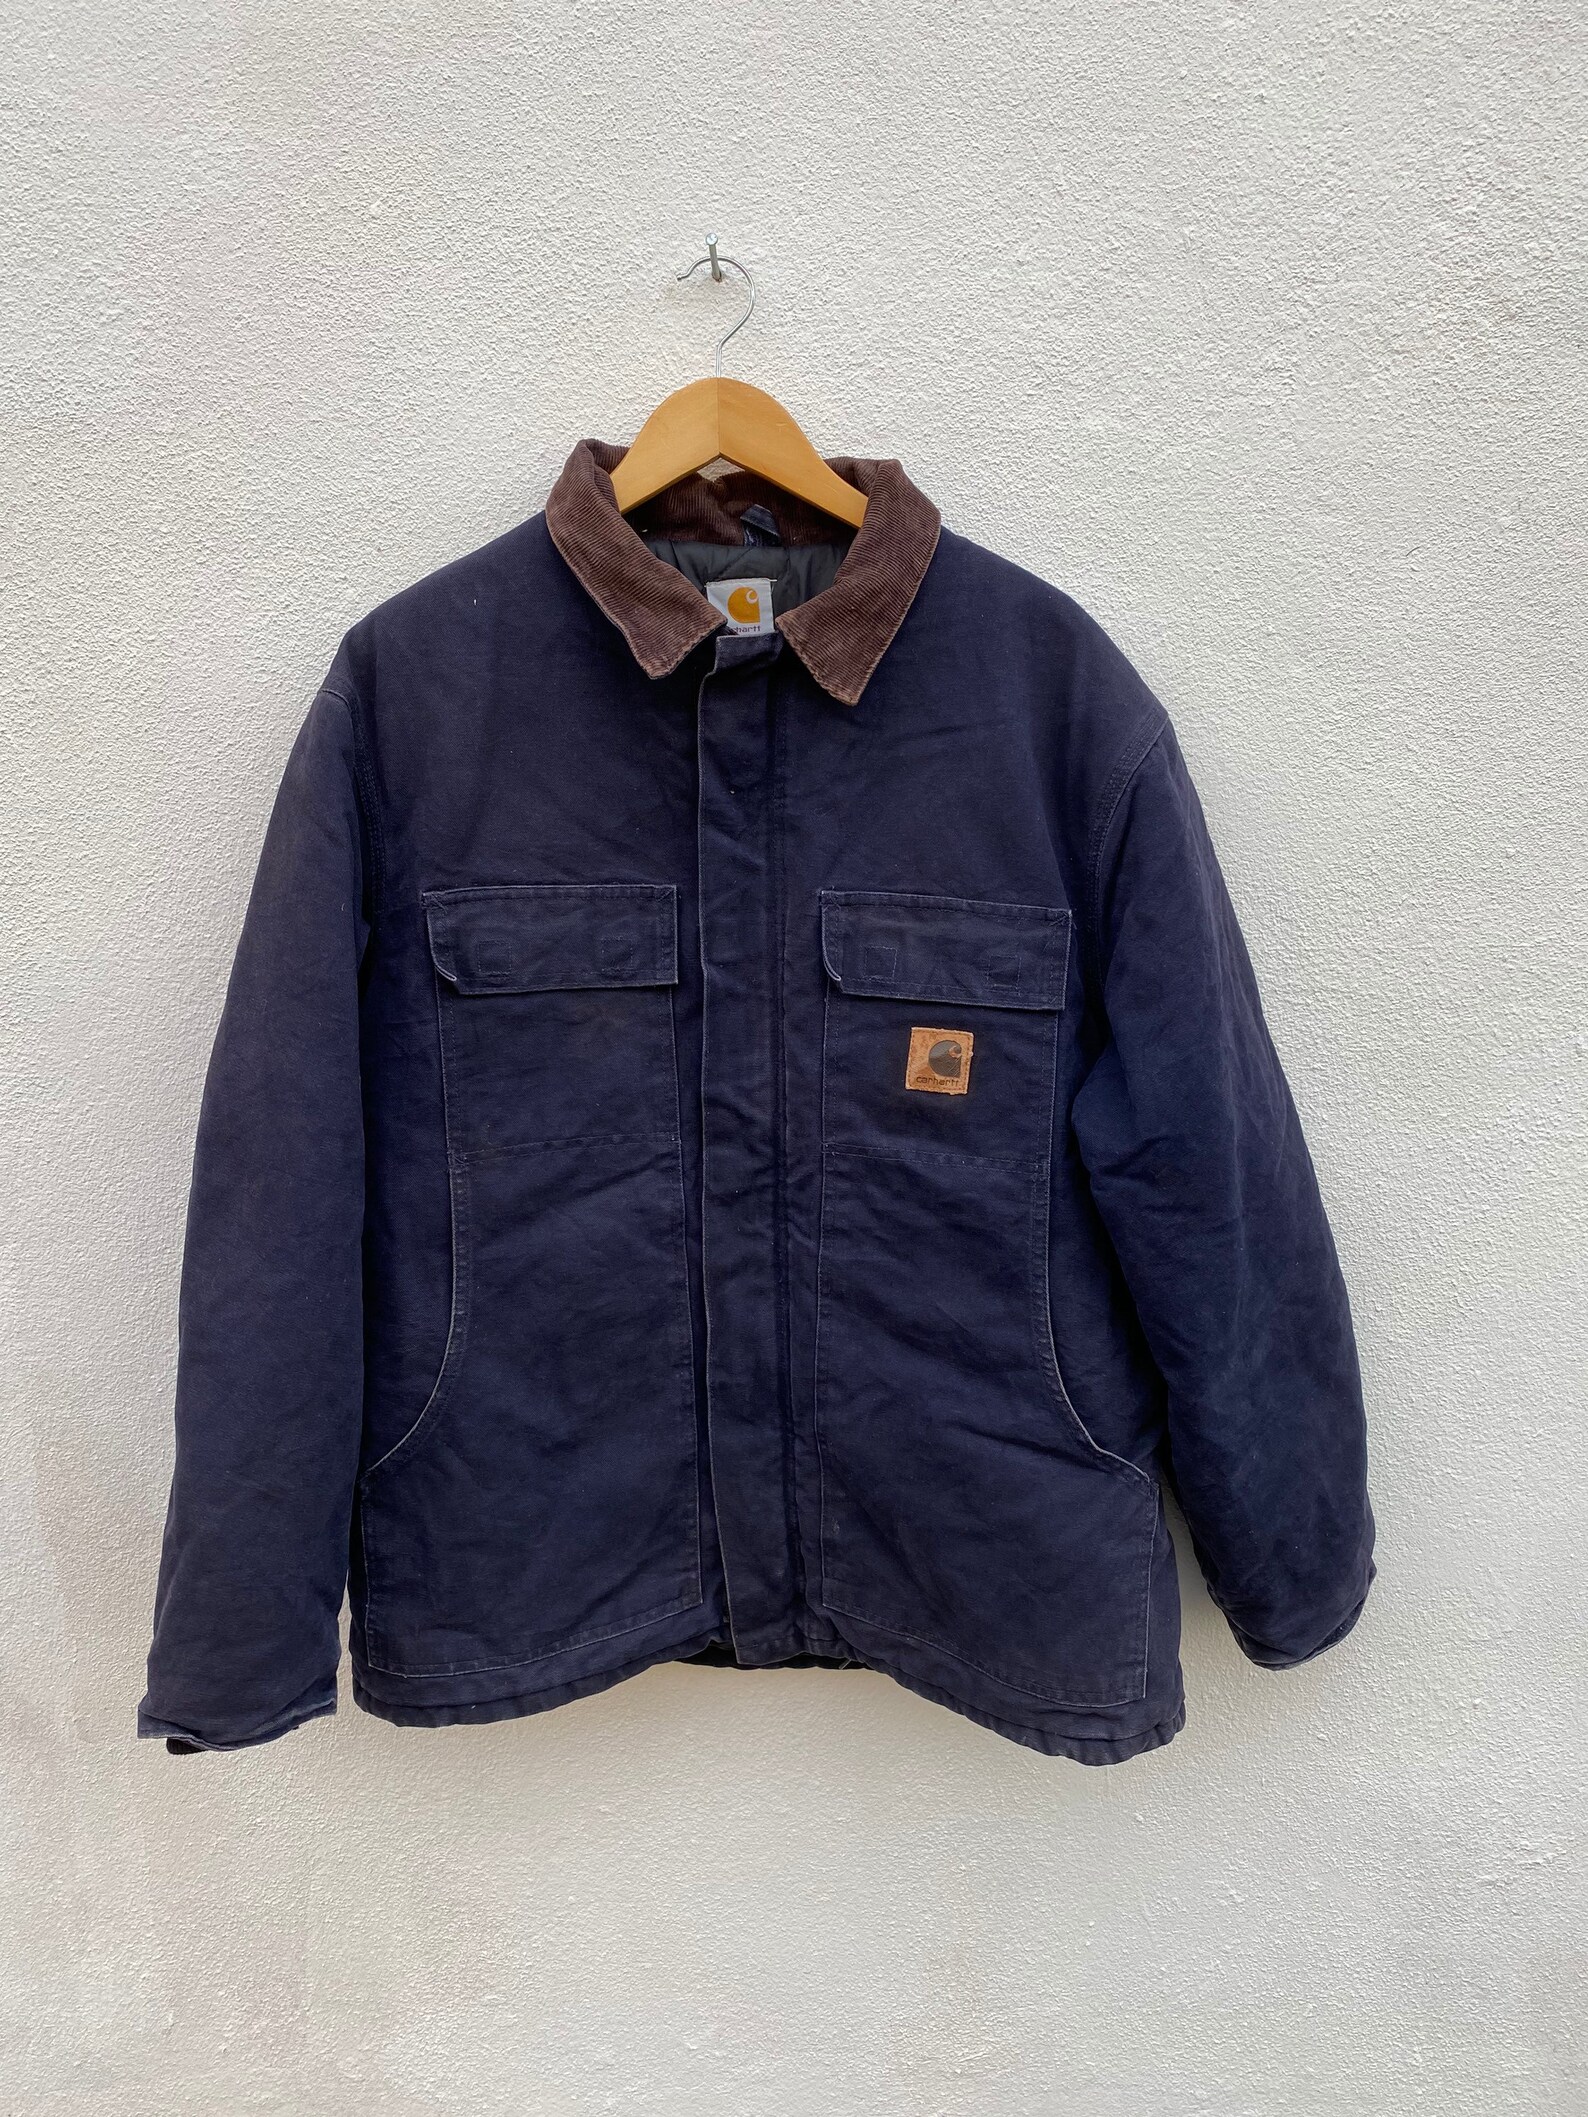 Vintage Carharrt work jacket canvas detroit worker jacket | Etsy